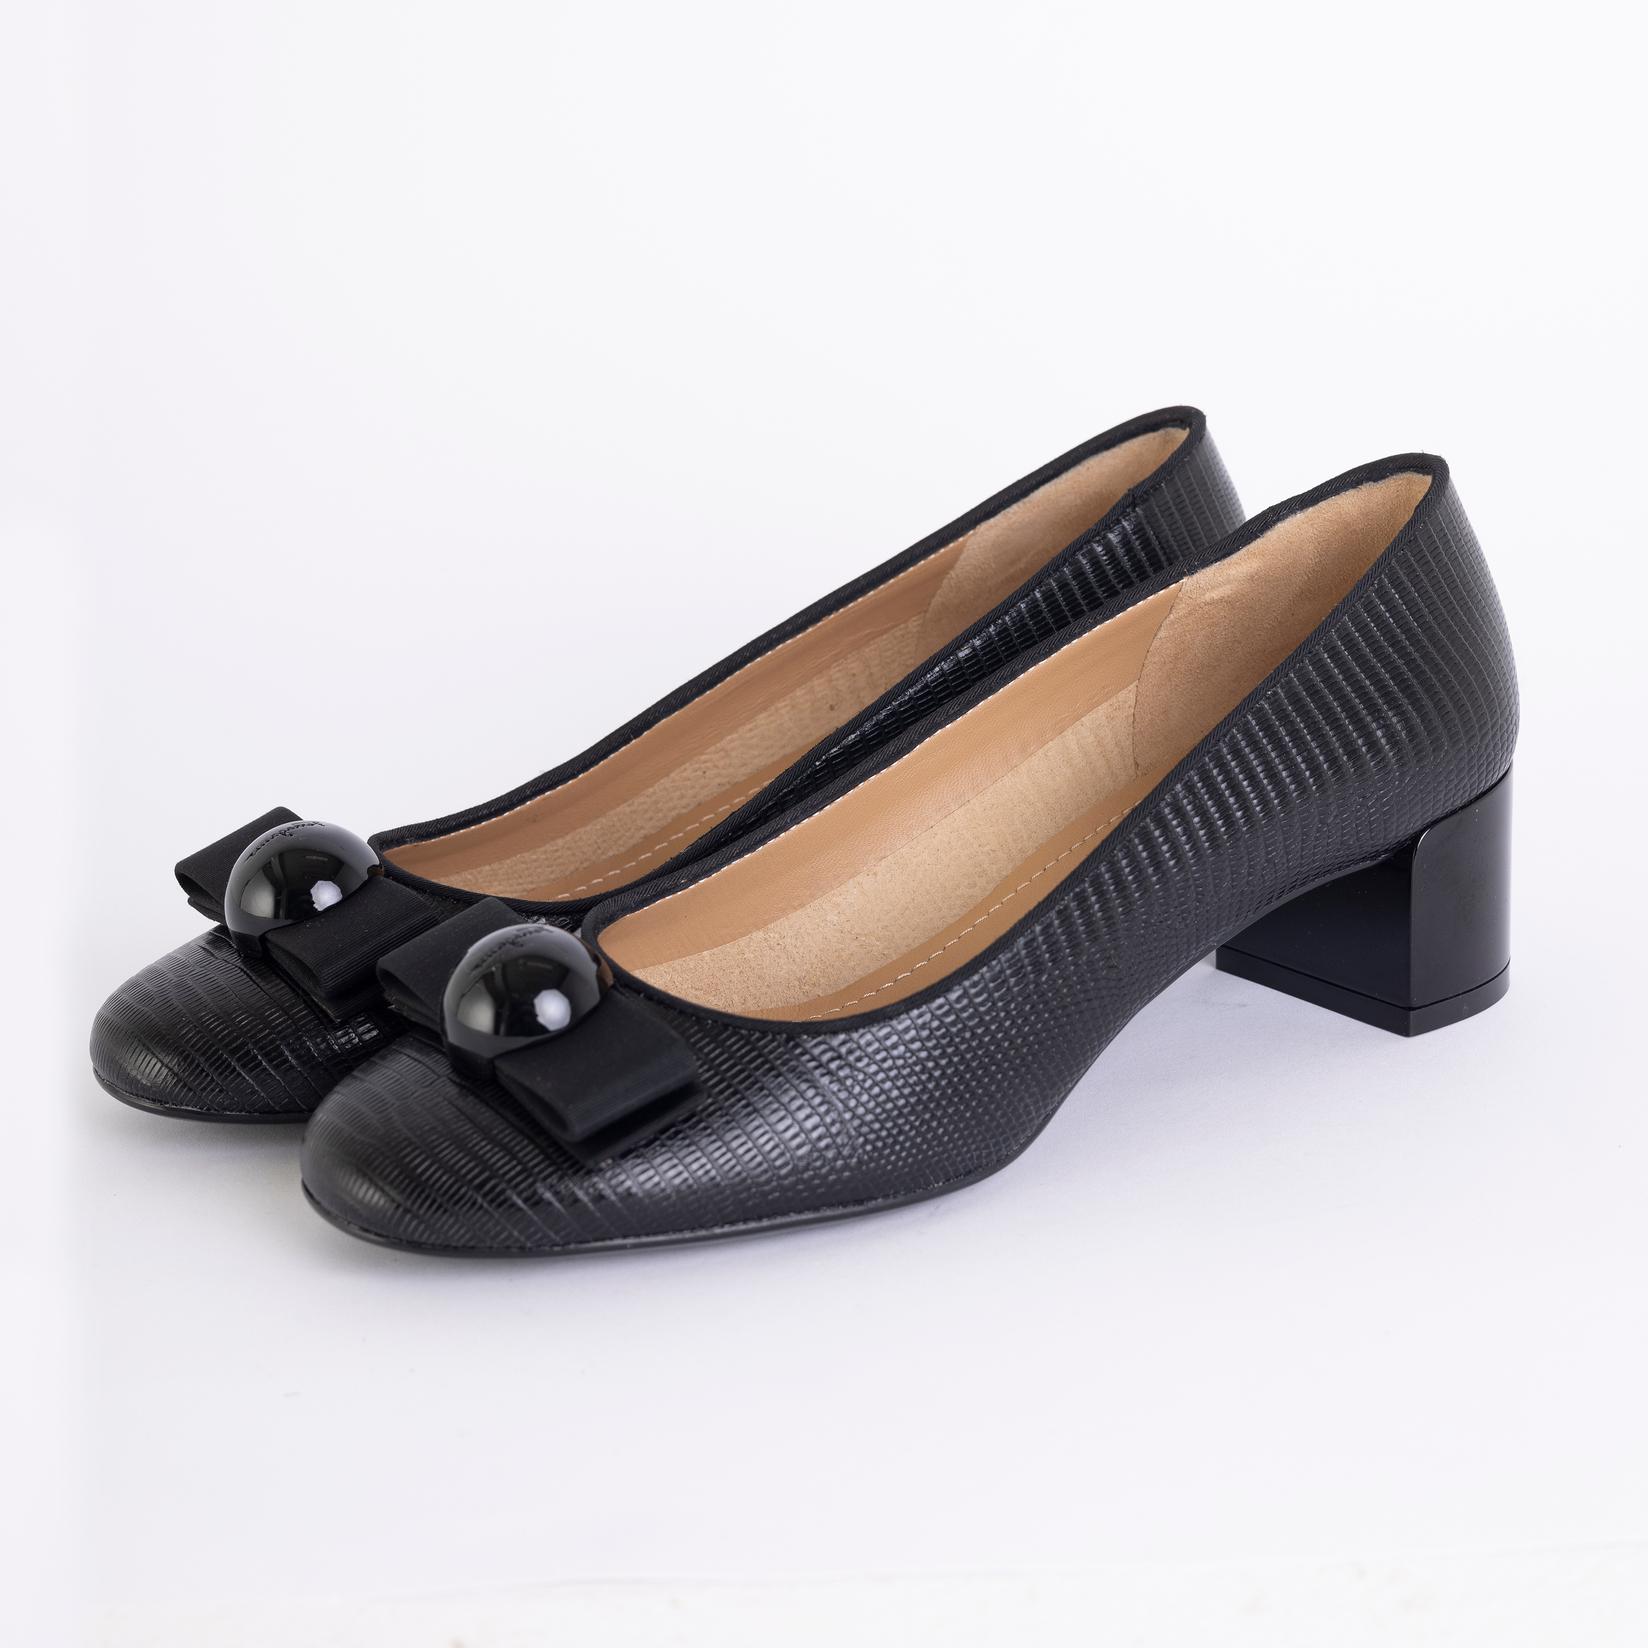 SALVATORE FERRAGAMO Ženske cipele crne